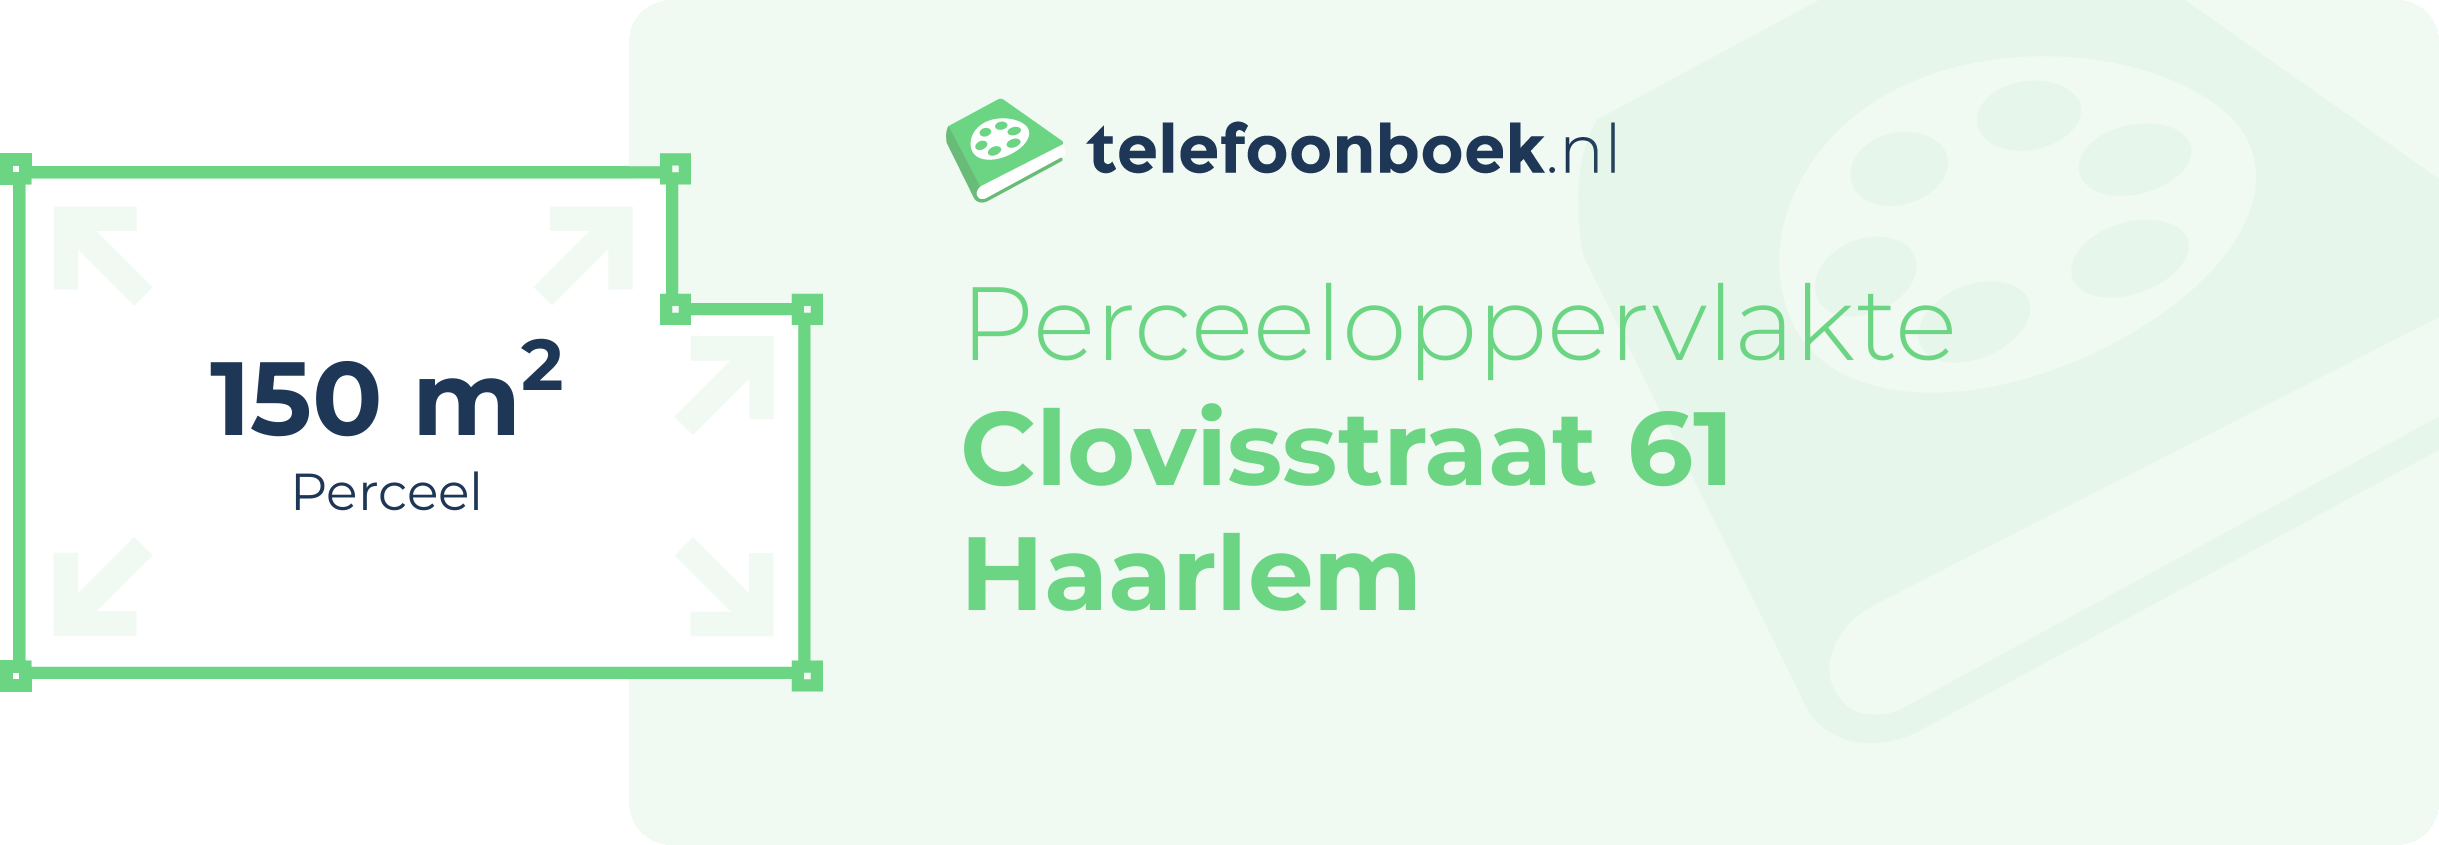 Perceeloppervlakte Clovisstraat 61 Haarlem